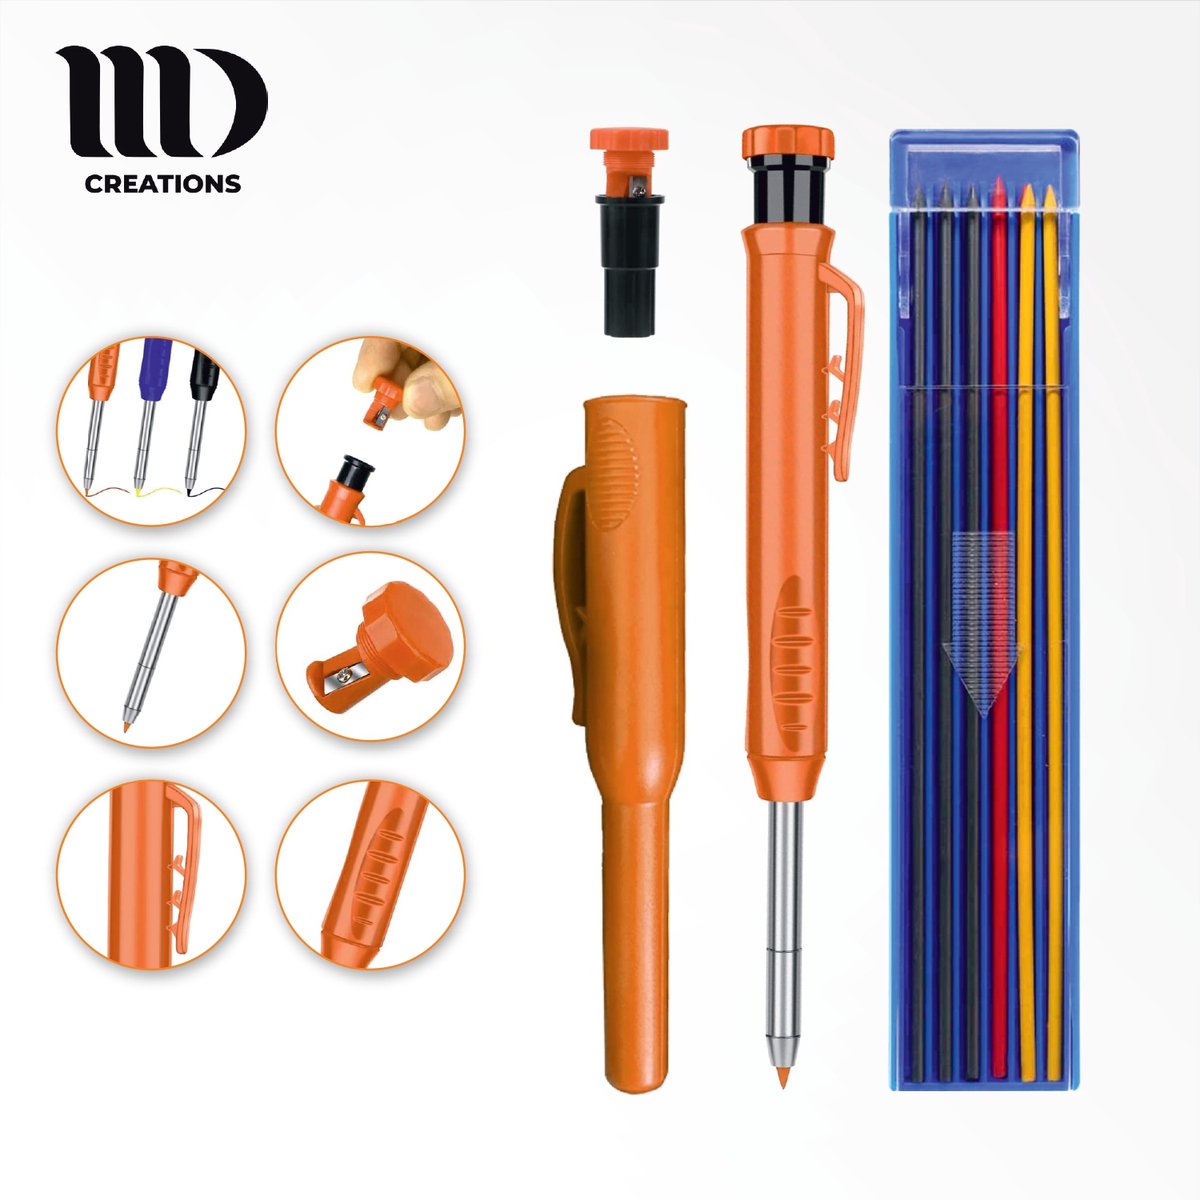 MD Creations - Markeerpotlood - Carpenter pencil - Markeerpotlood met vulling- longlife - Grafiet vulling - werf stiften - pica dry